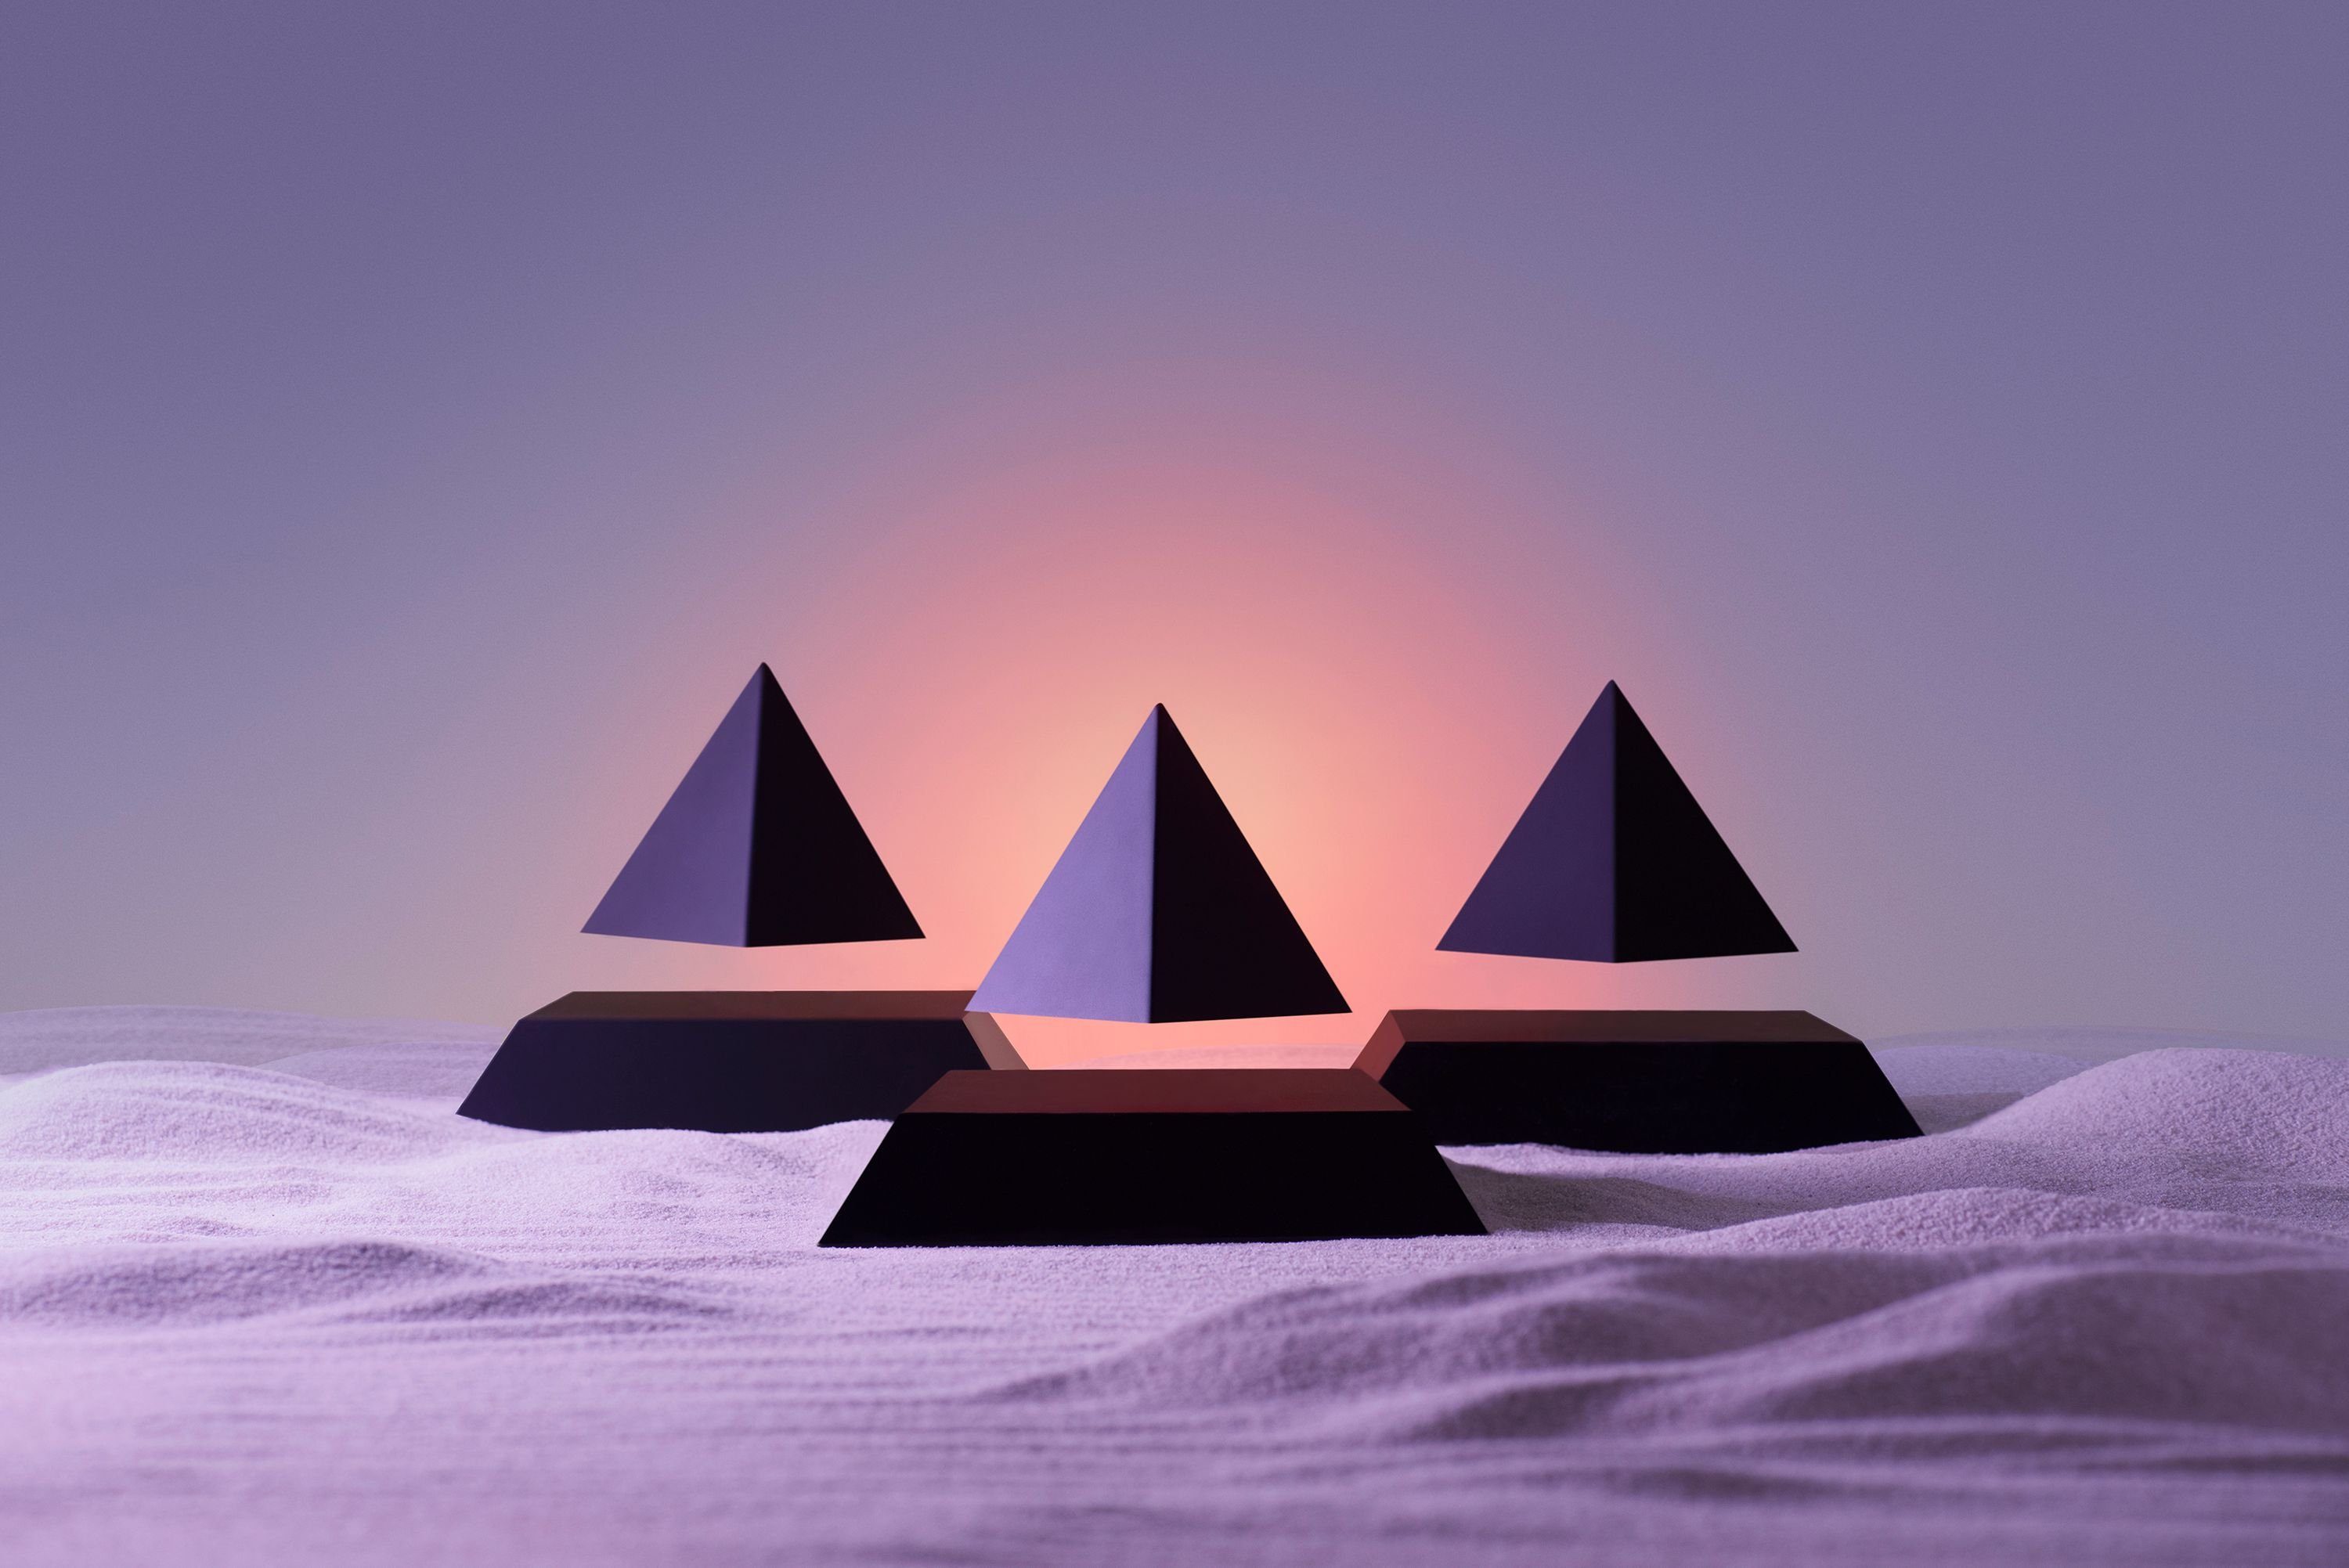 Dekoobjekt Pyramide FLYTE Py, schwebende Basis Schwarz Py, Schwarz,Pyramide